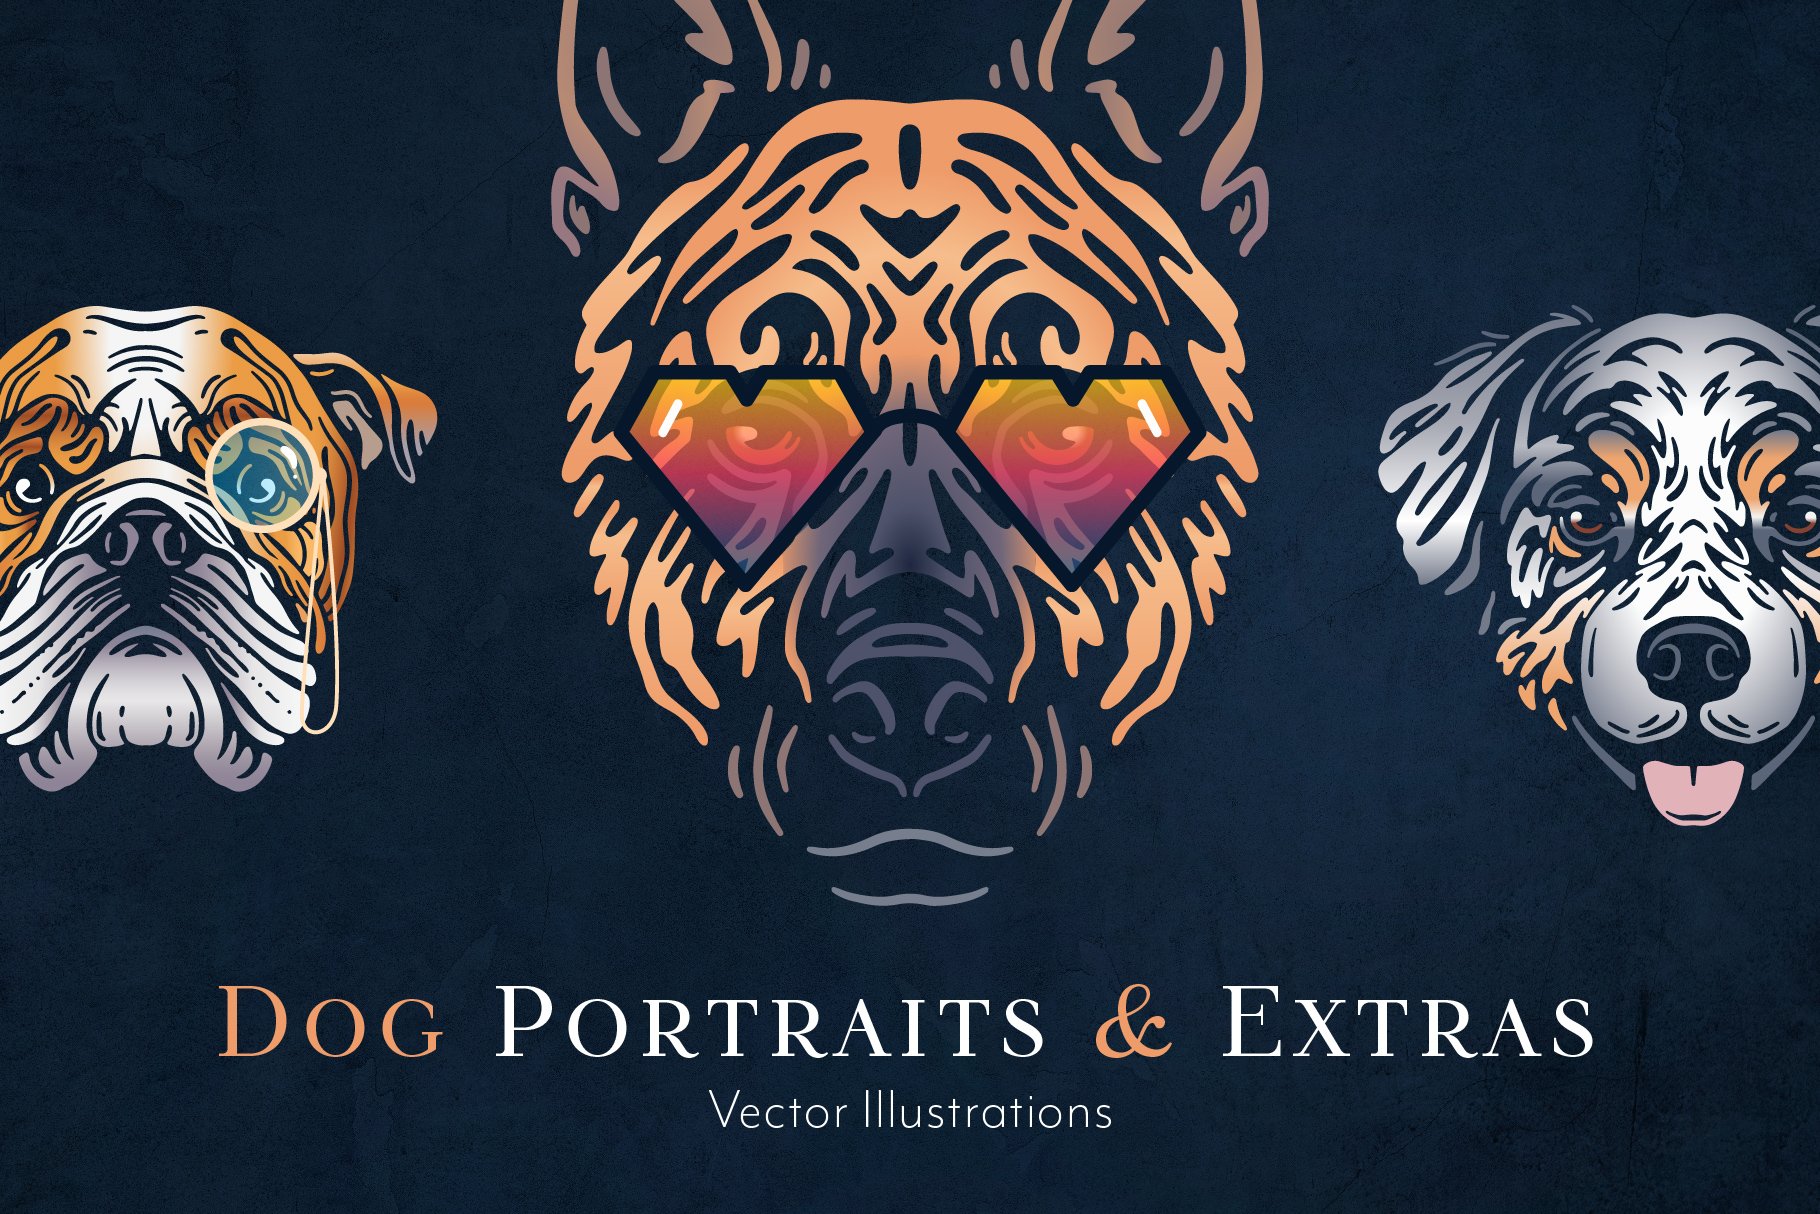 Dog Portraits & Extras cover image.